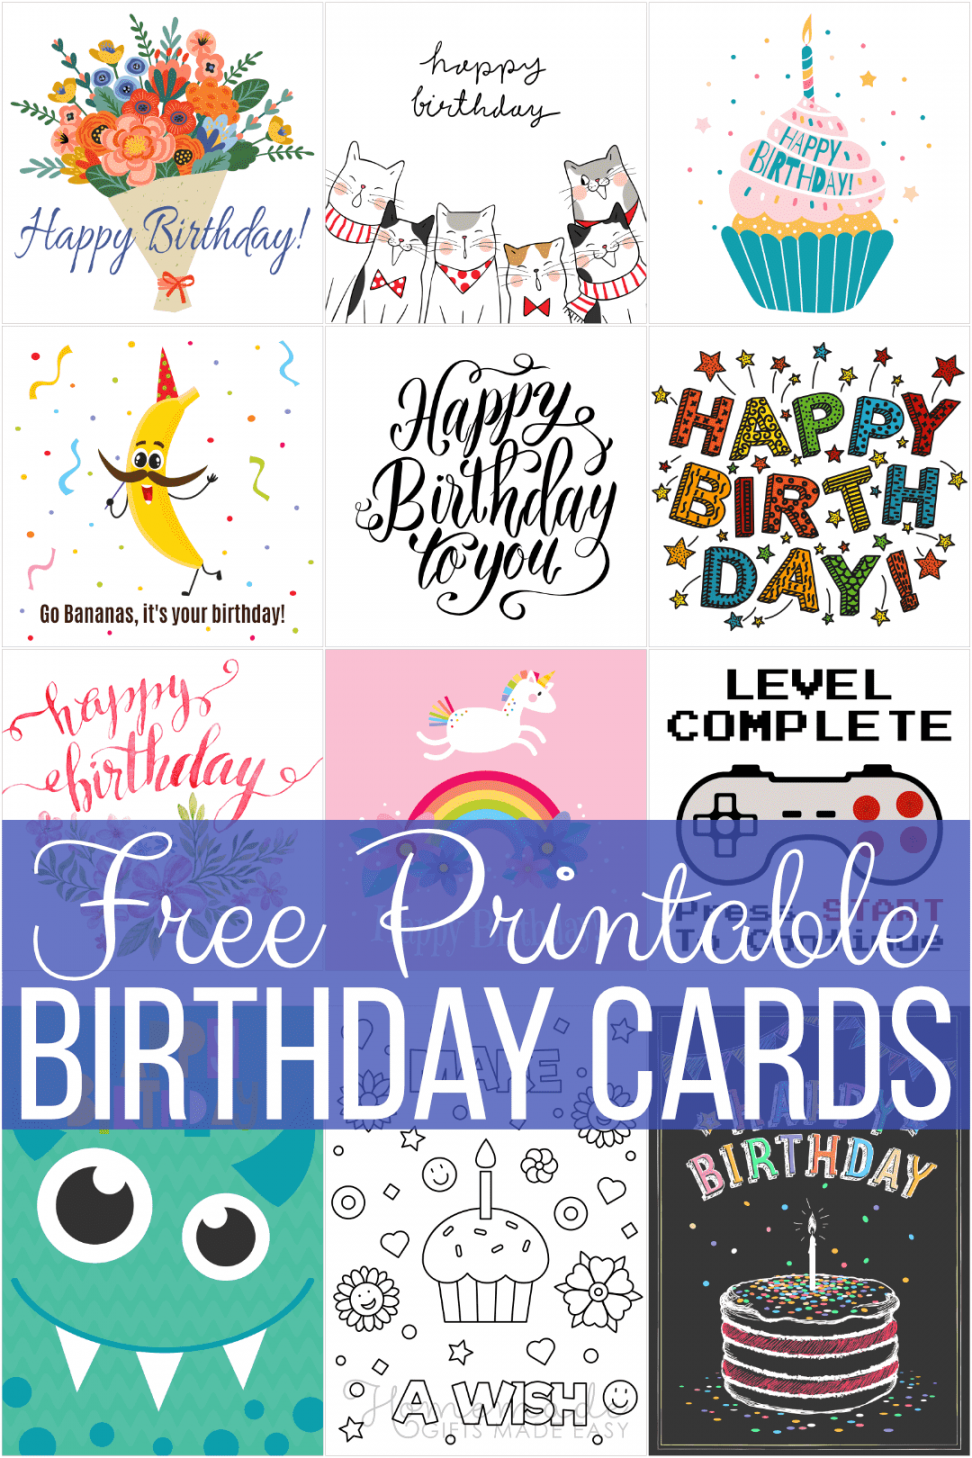 Printable Birthday Card Free - Printable - Free Printable Birthday Cards for Everyone